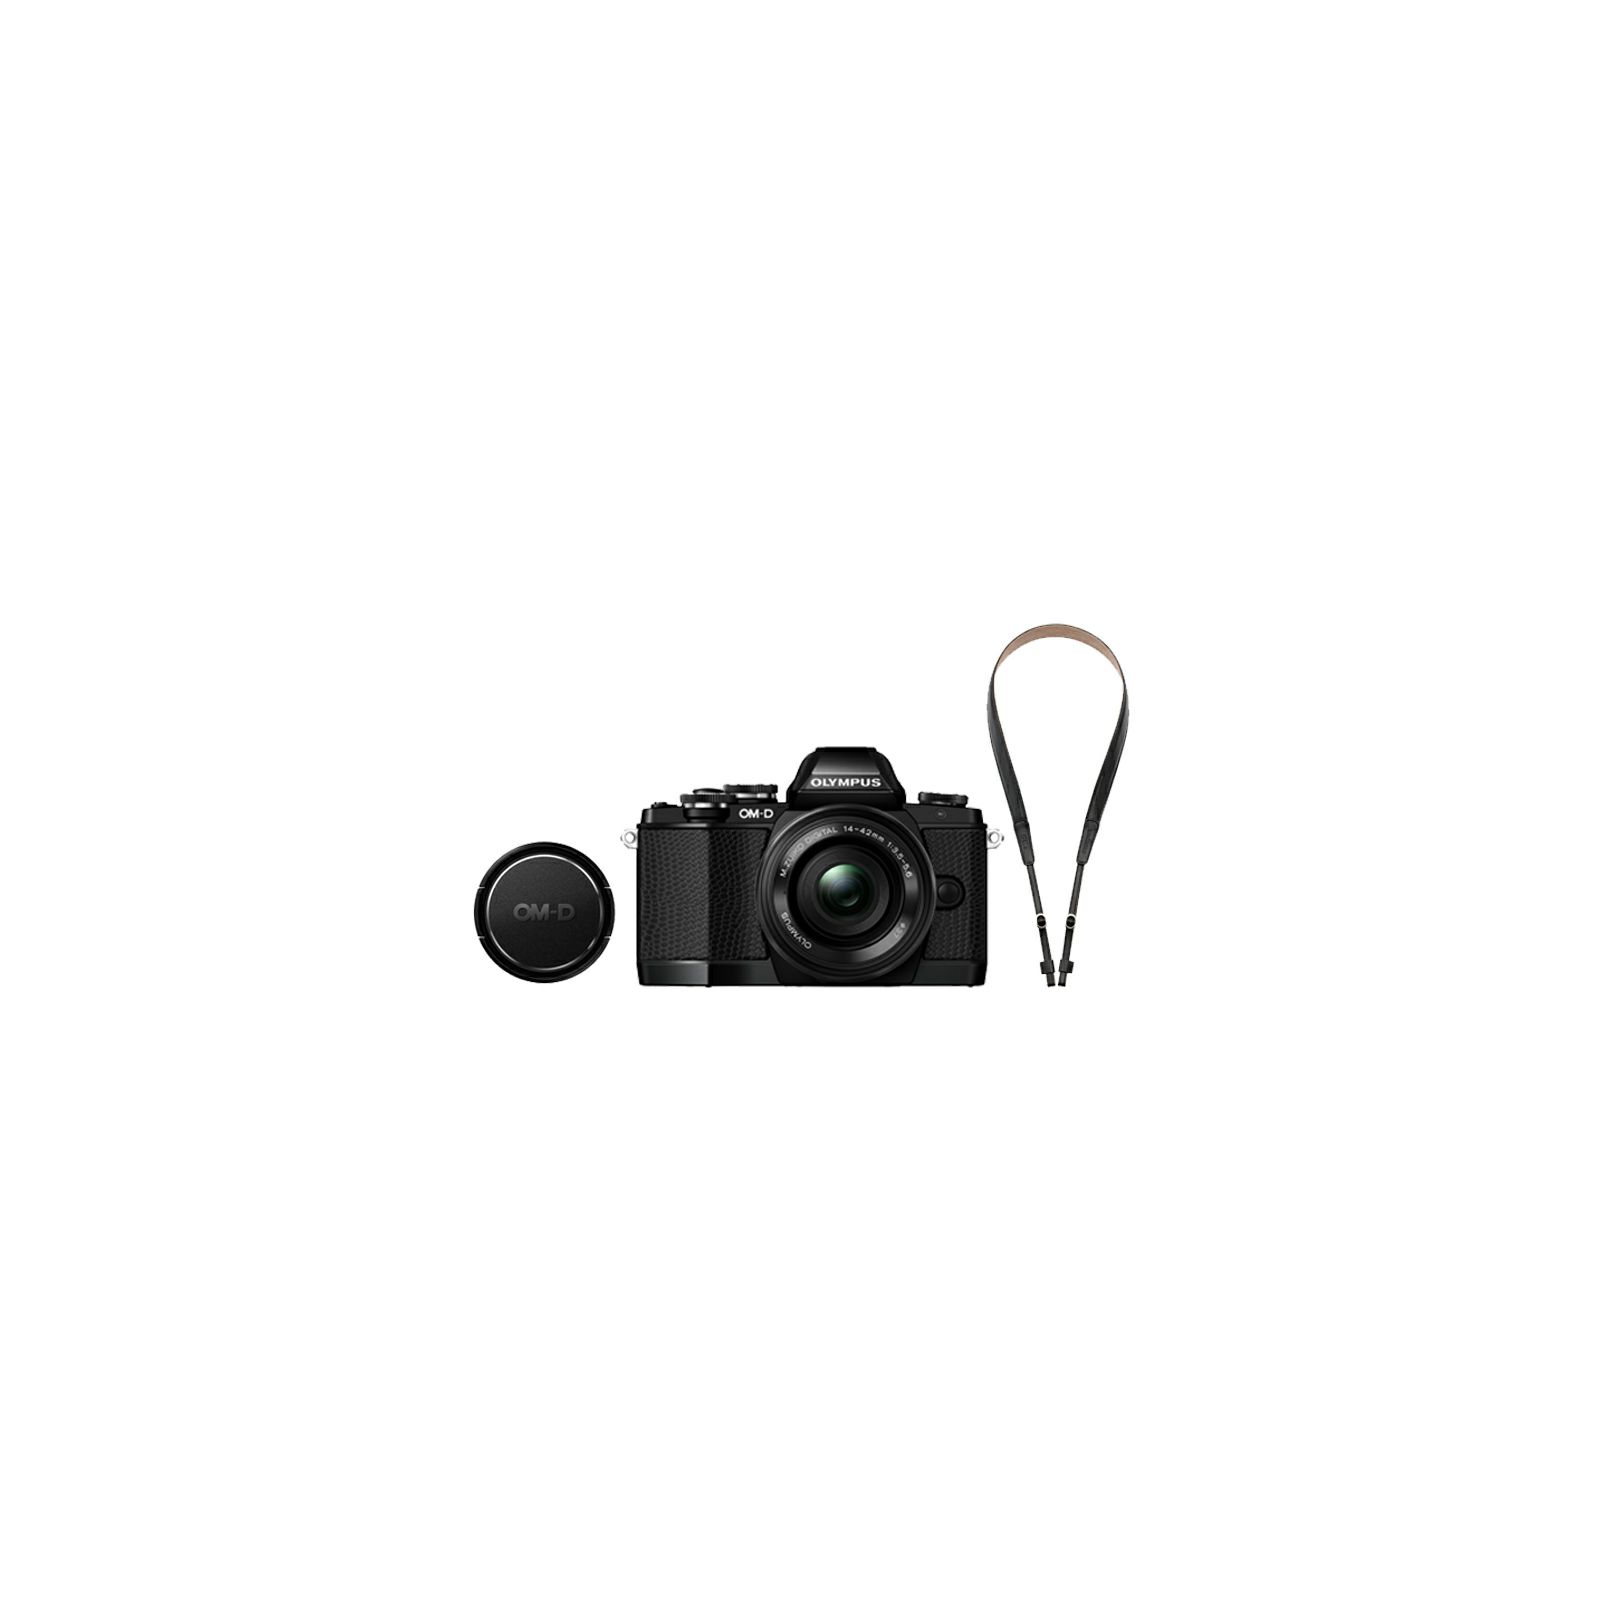 Olympus E-M10 Limited Edition Kit black/black / E-M10 black + EZ-M1442EZ black incl. Charger & Battery, lens cap & strap Micro Four Thirds MFT - OM-D Camera digitalni fotoaparat V207026BE000